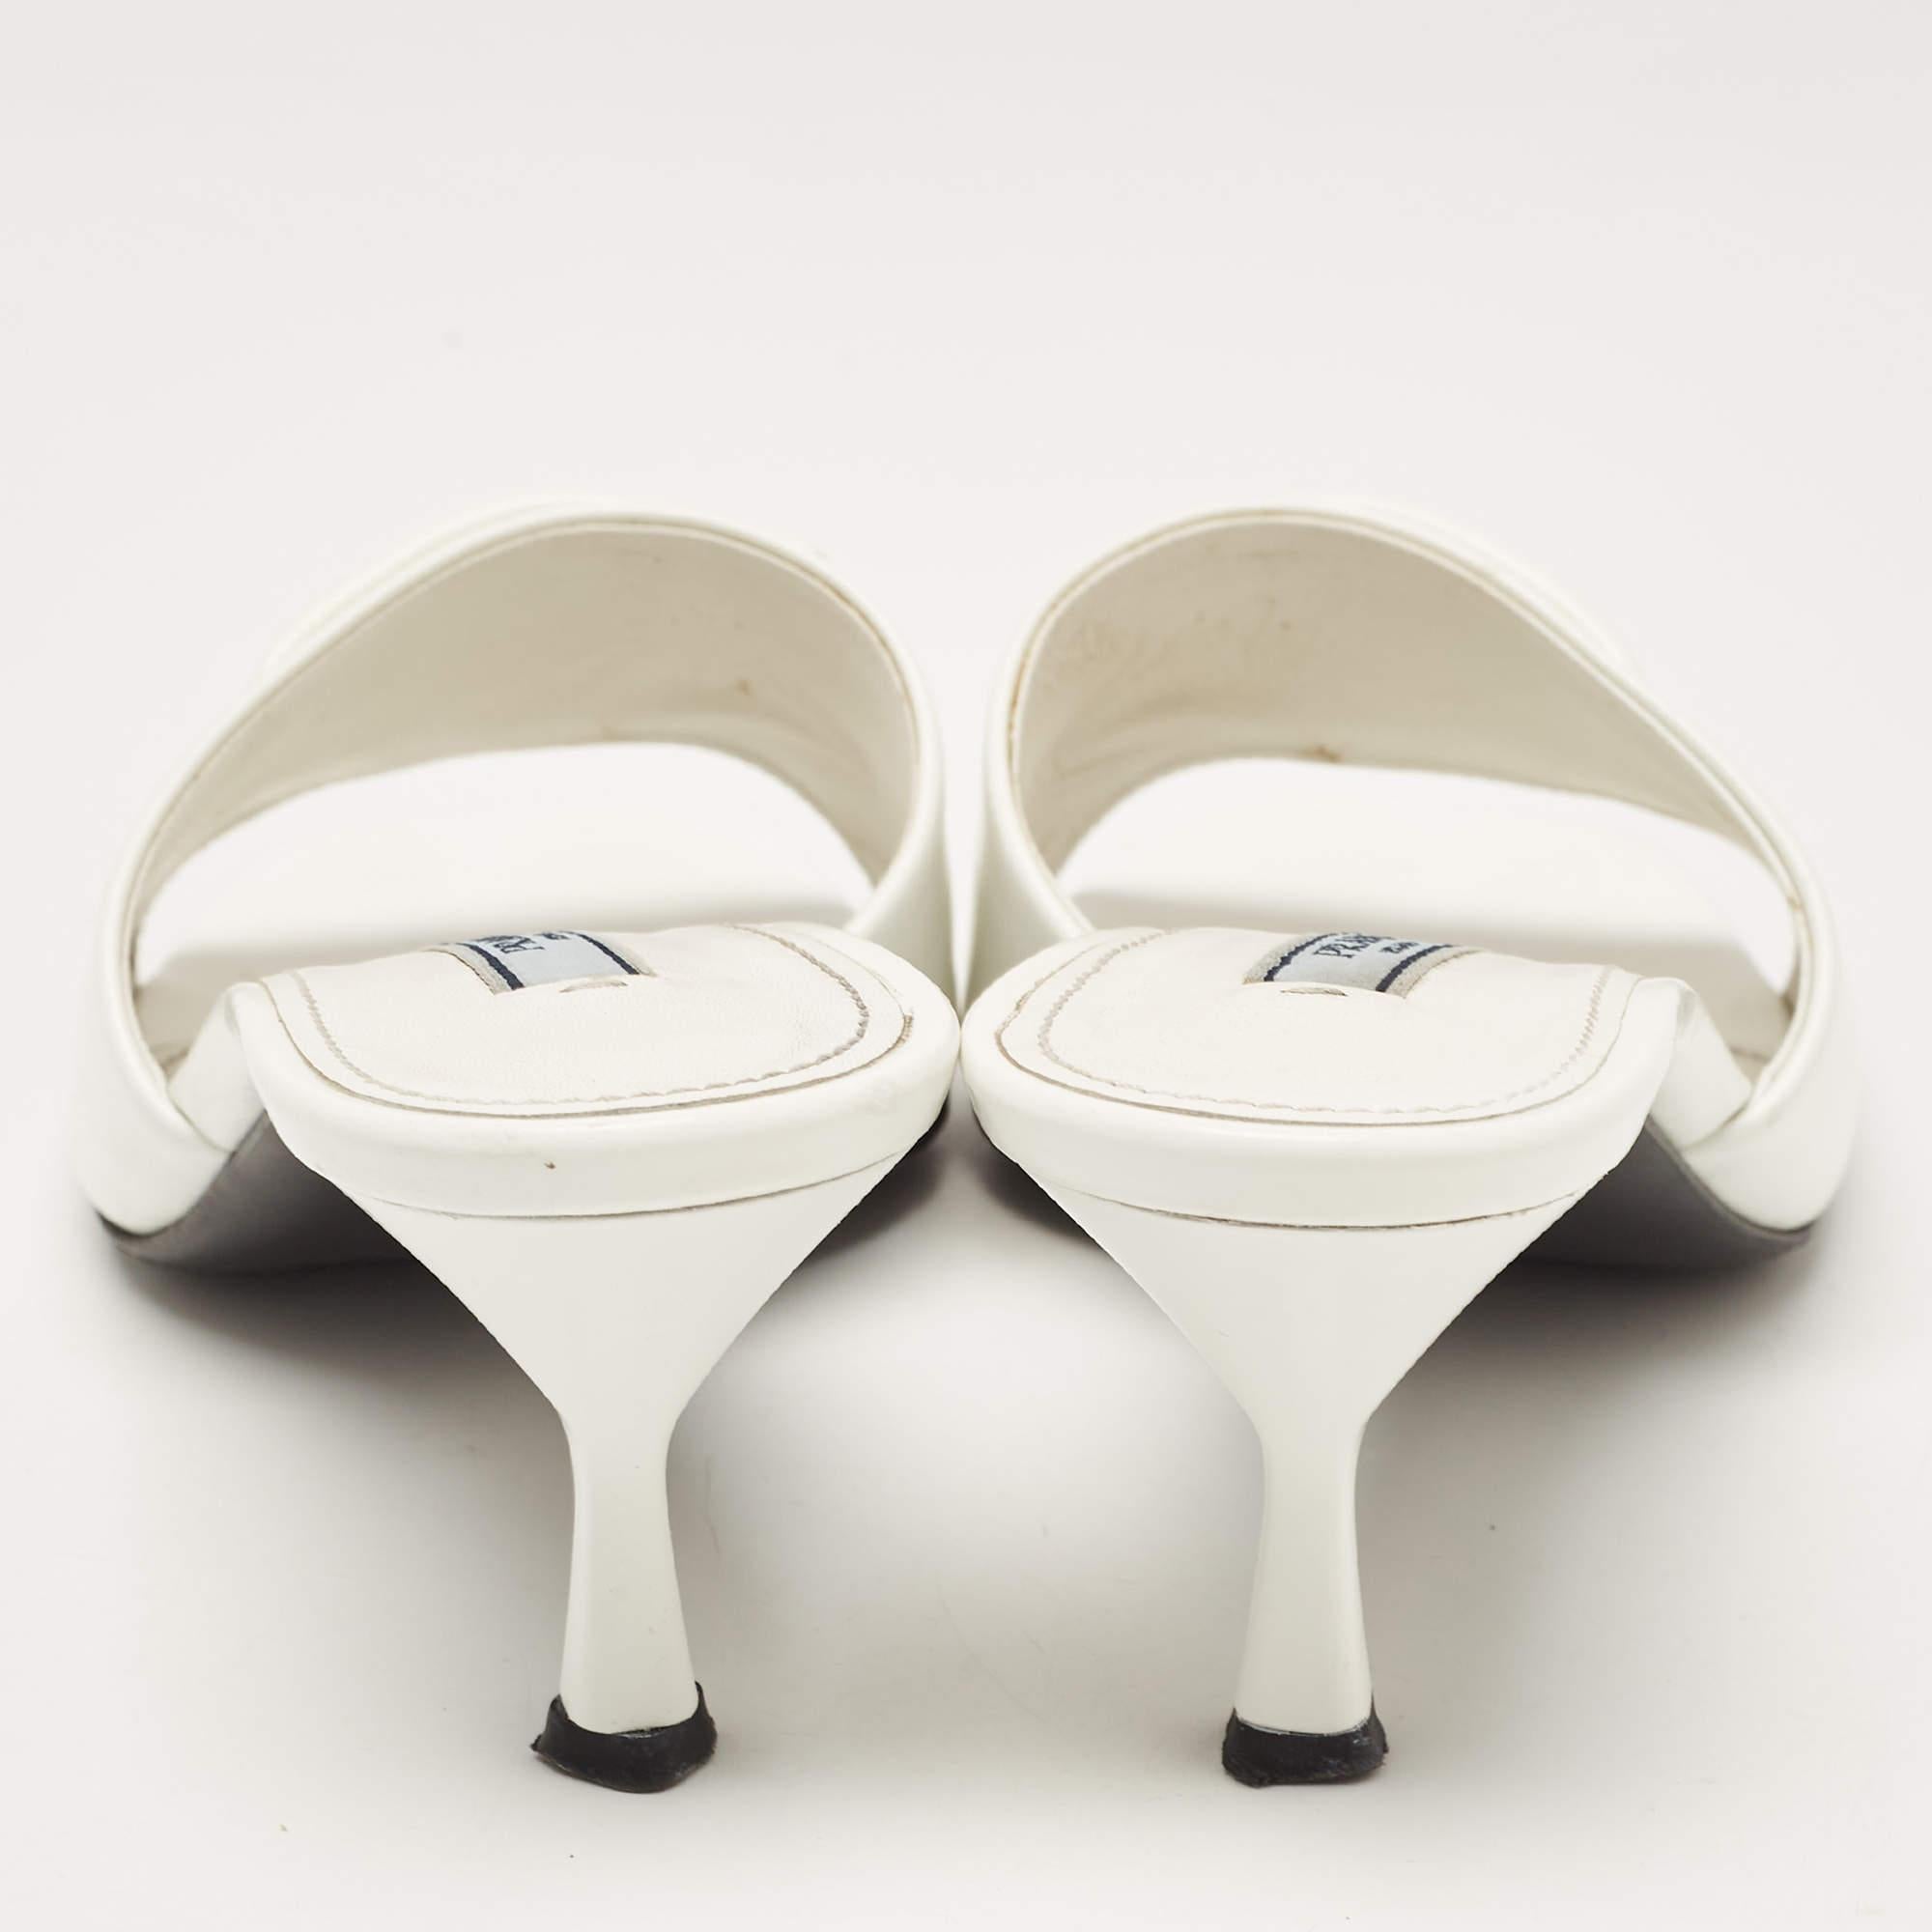 Prada White Leather Logo Slide Sandals Size 37.5 4